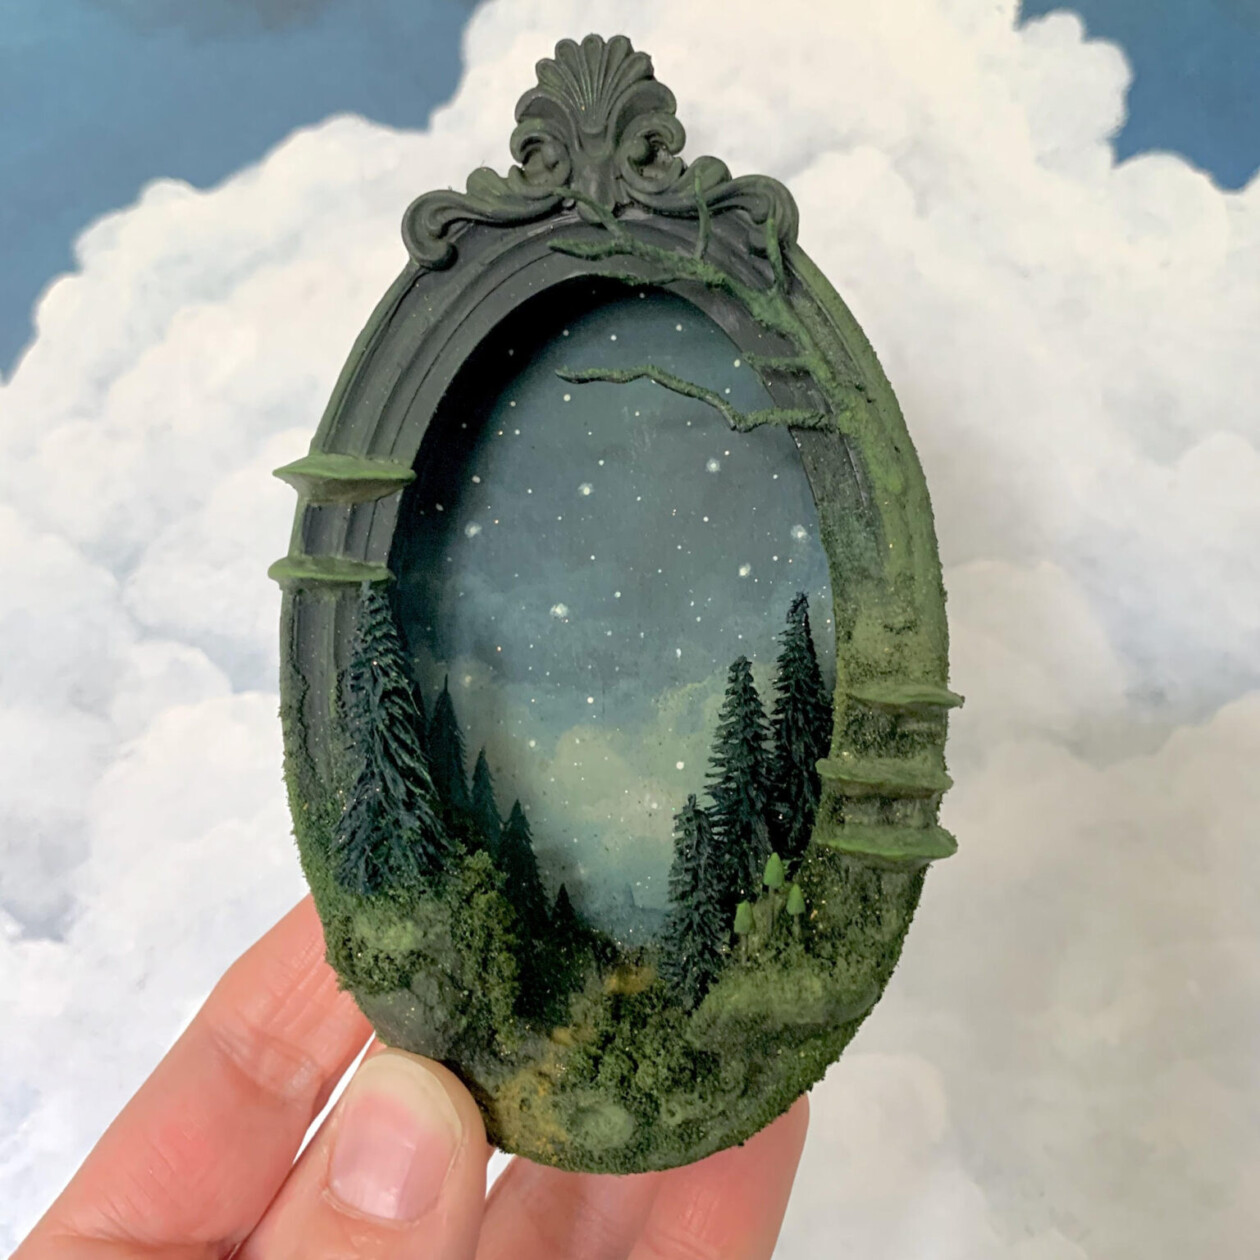 Magical Handmade Miniatures And Dioramas By Caroline Dewison (9)